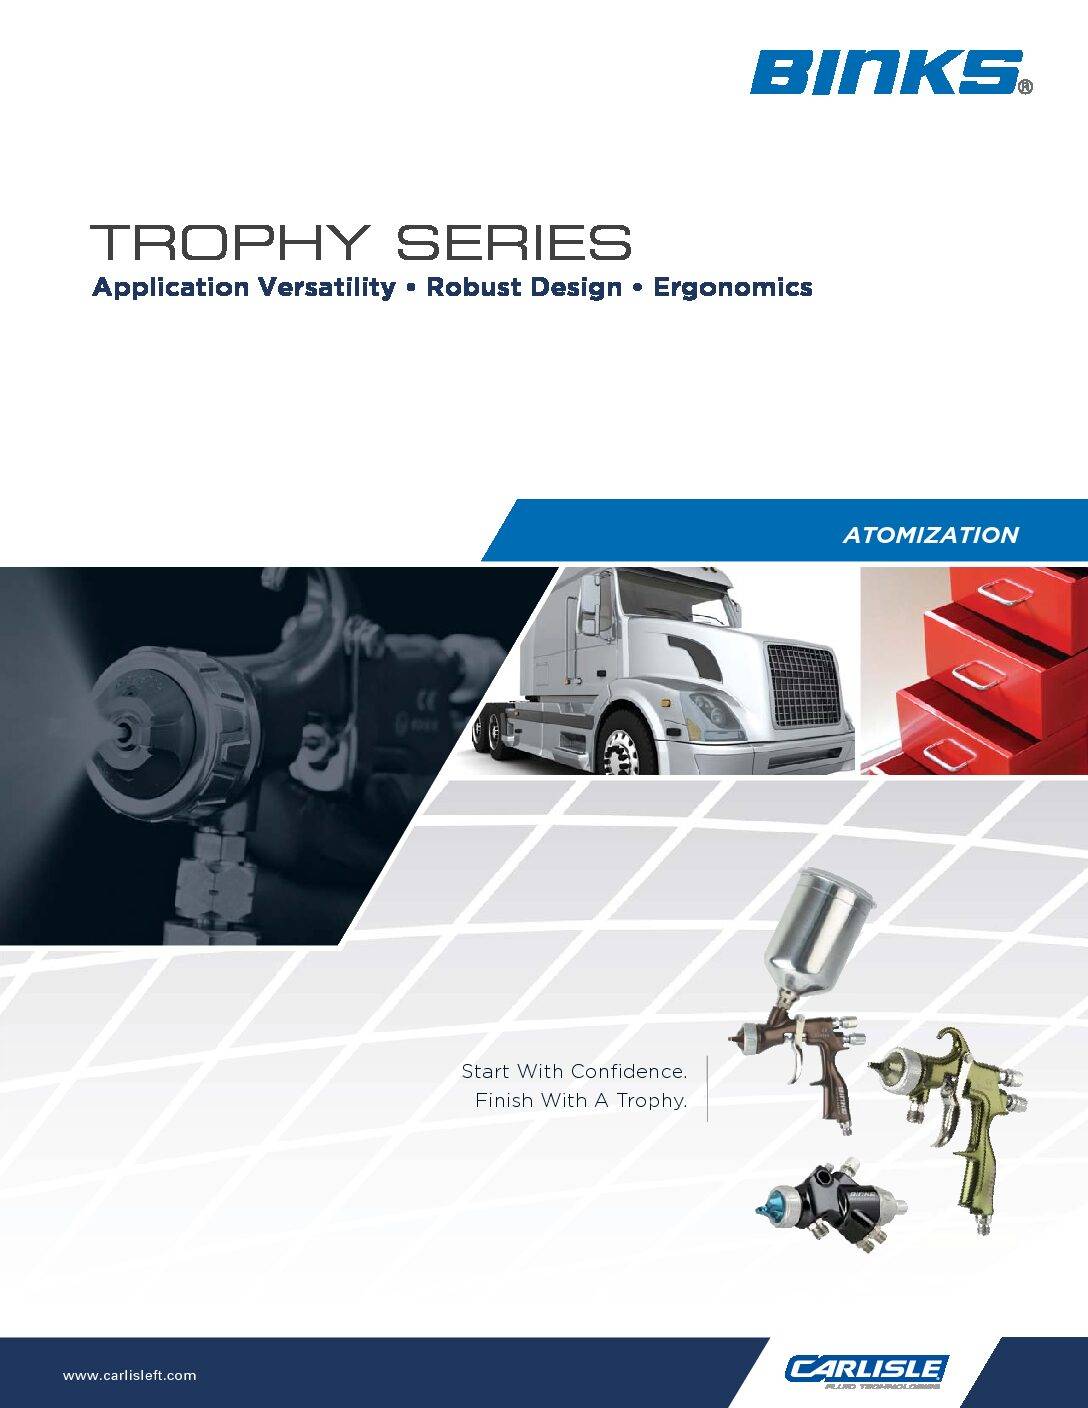 Binks Trophy series brochure